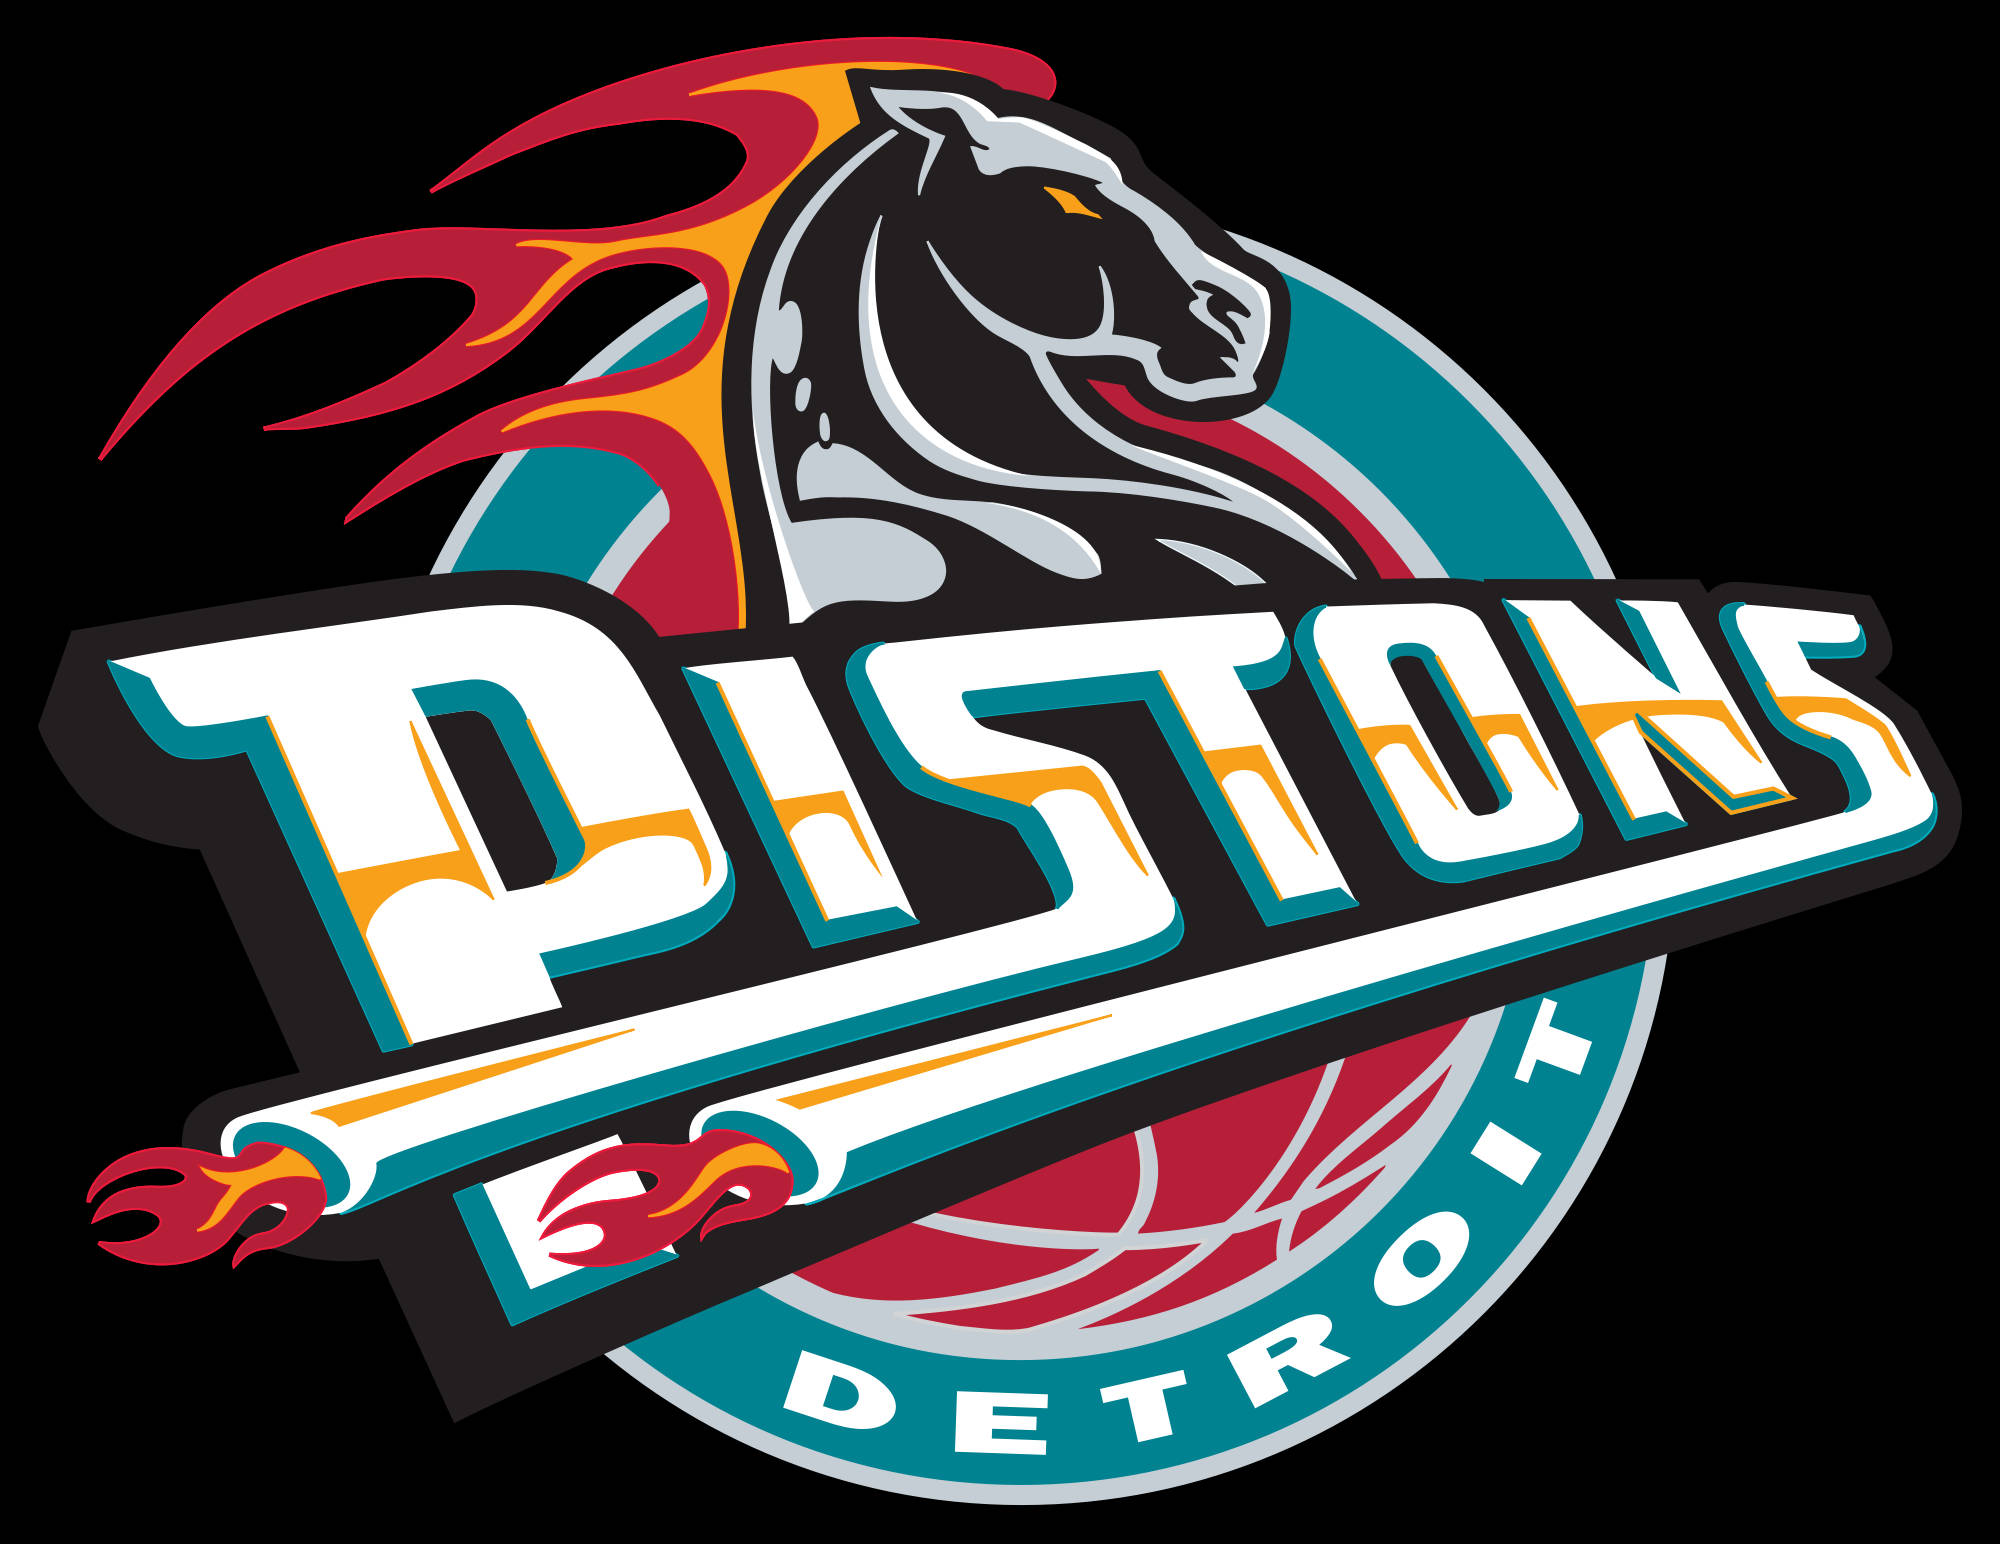 Detroit pistons. Пистонс лого. Детройт клуб НБА. Детройт Пистонс эмблема.